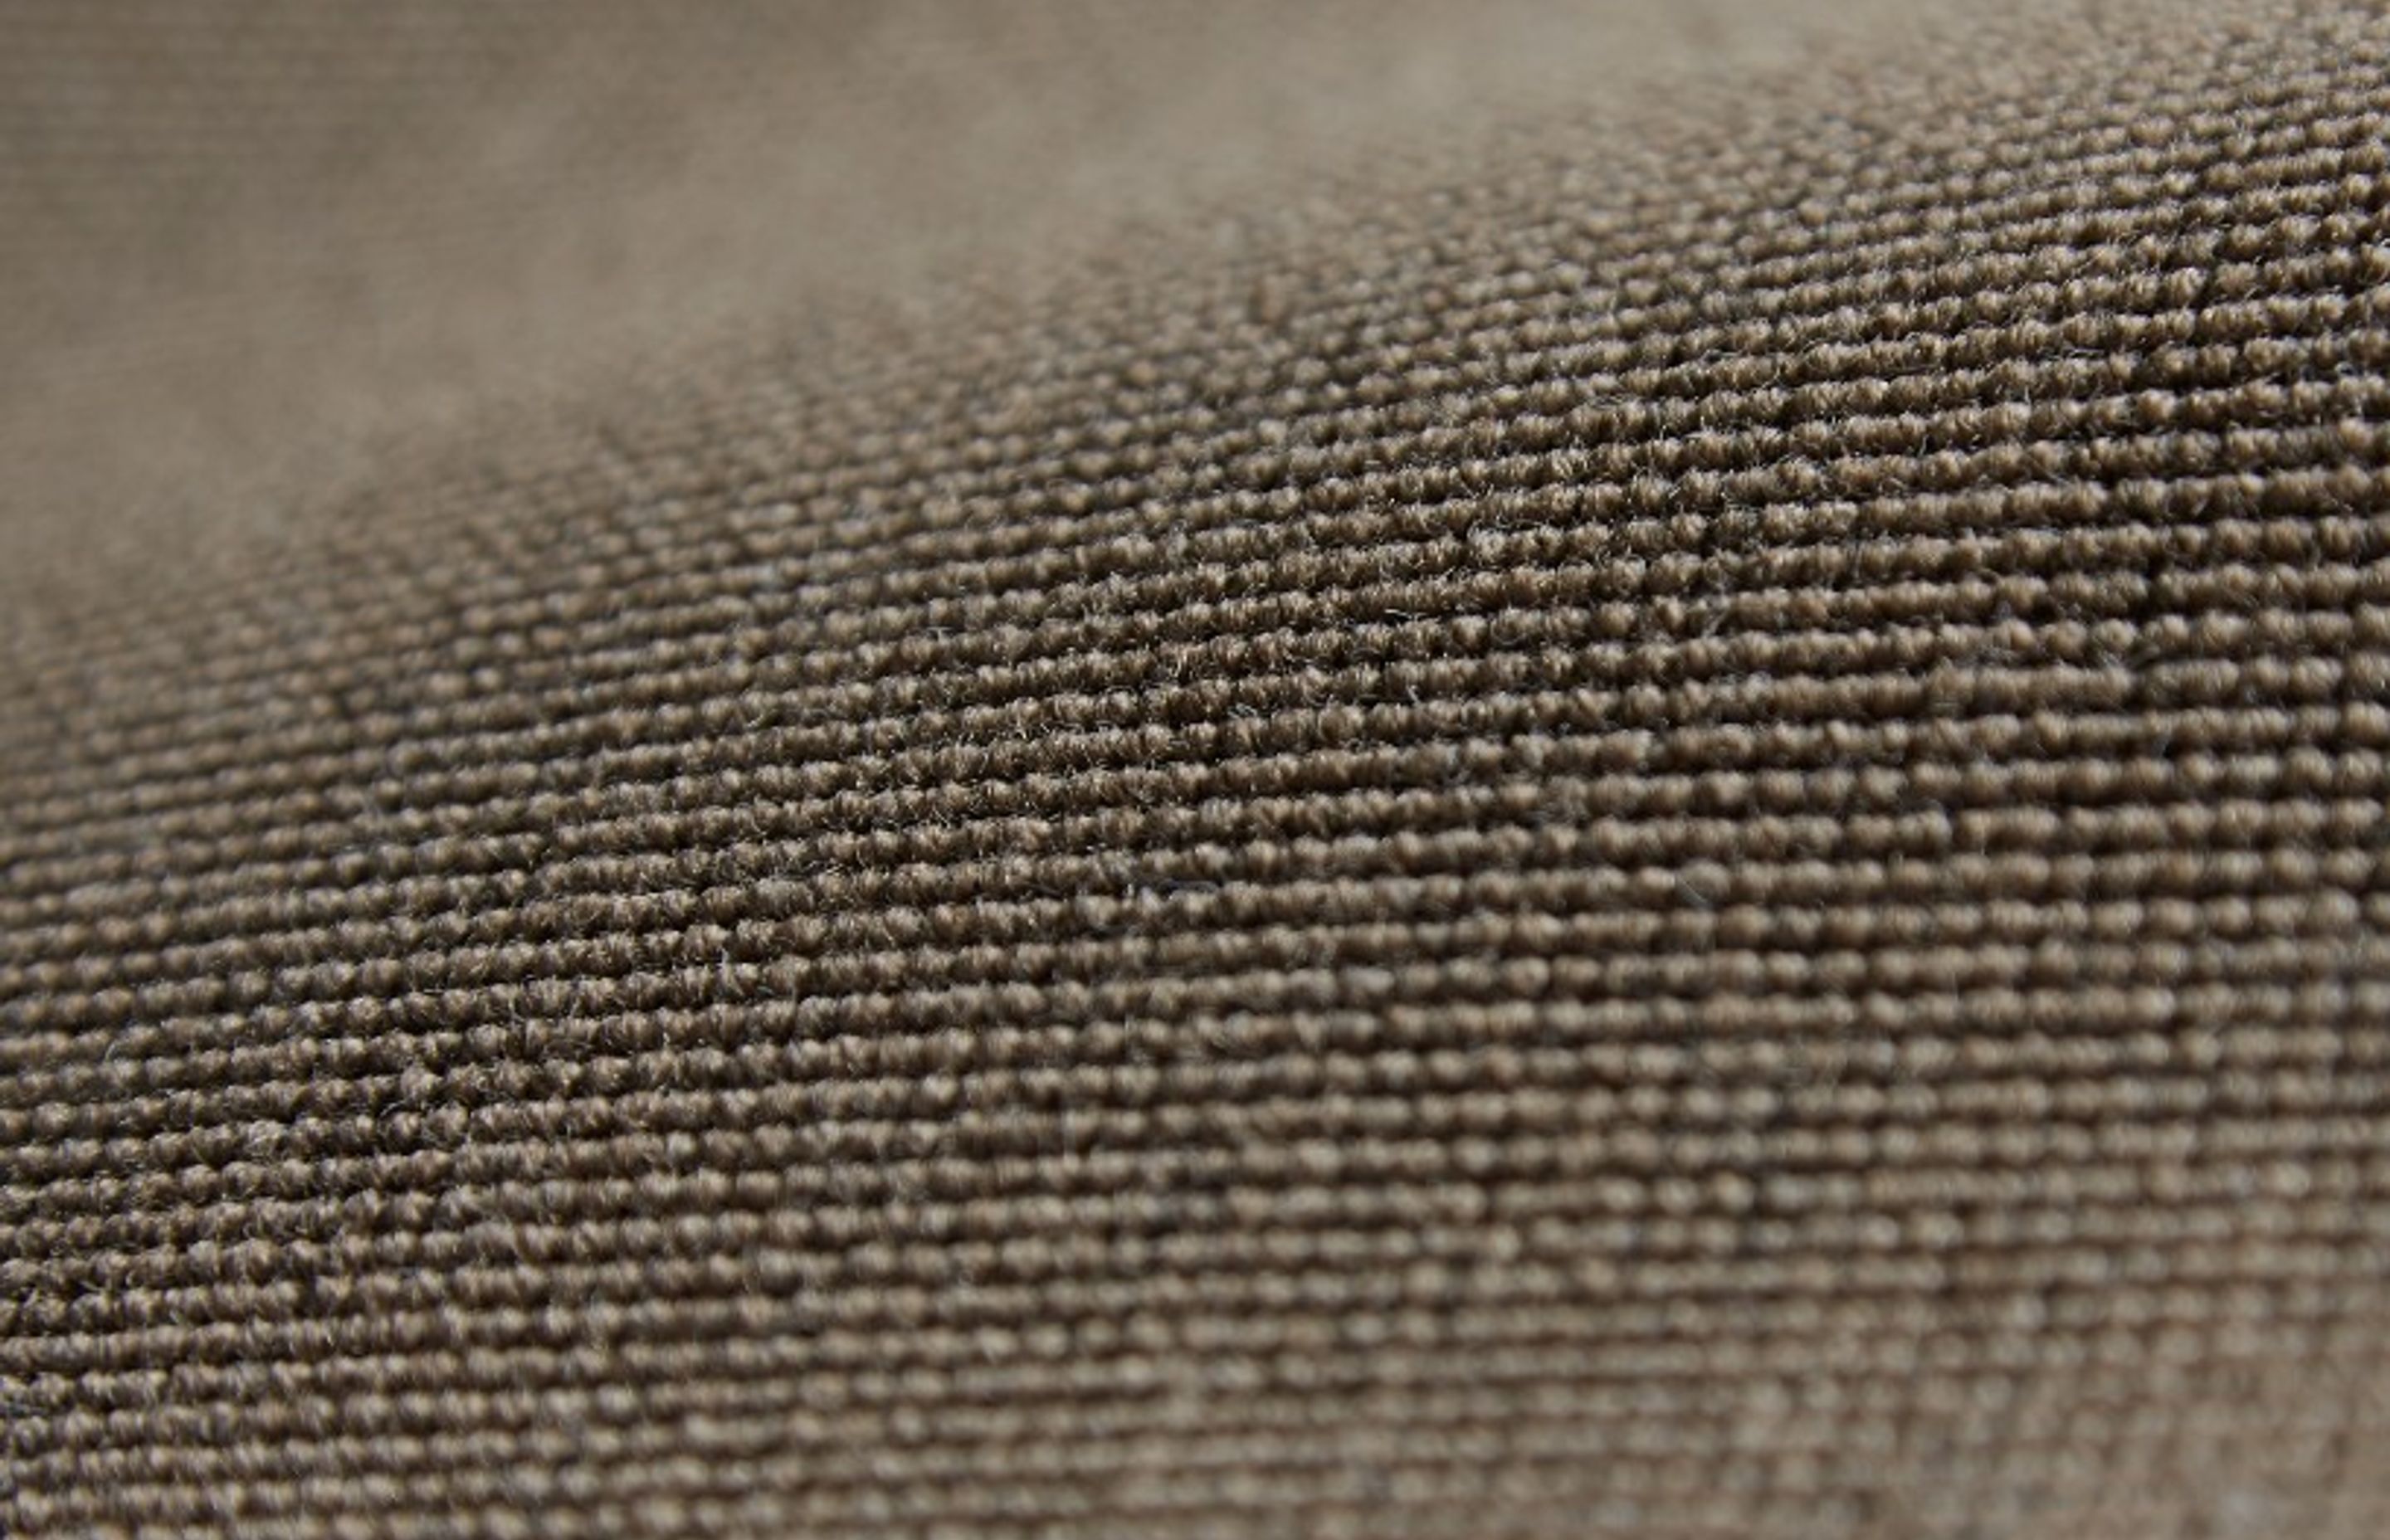 Højer Kontrakt Original 80% wool blend broadloom from Fletco.